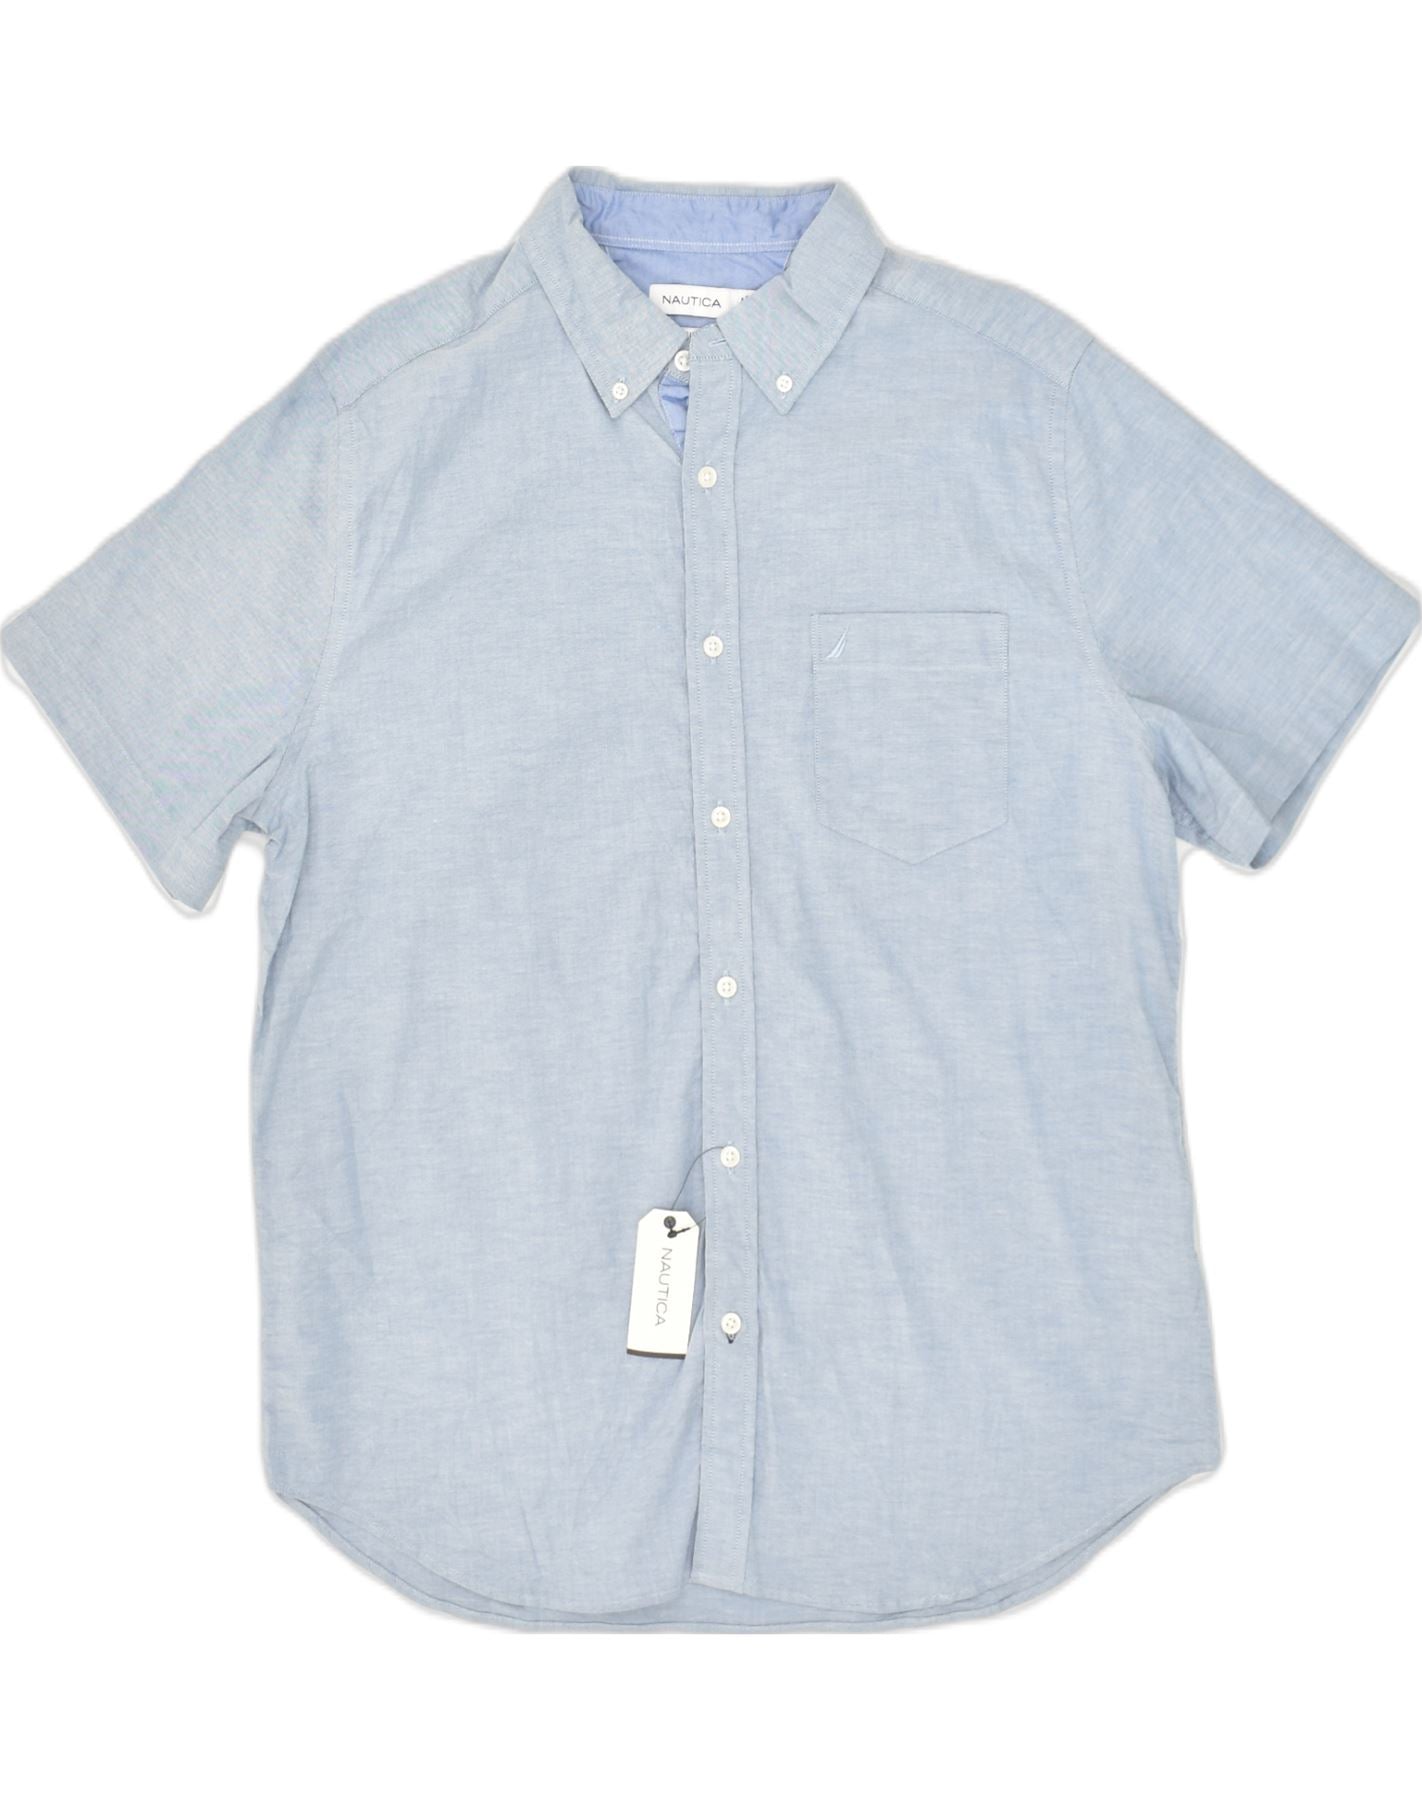 NAUTICA Mens Stretch Classic Fit Short Sleeve Shirt Large Blue